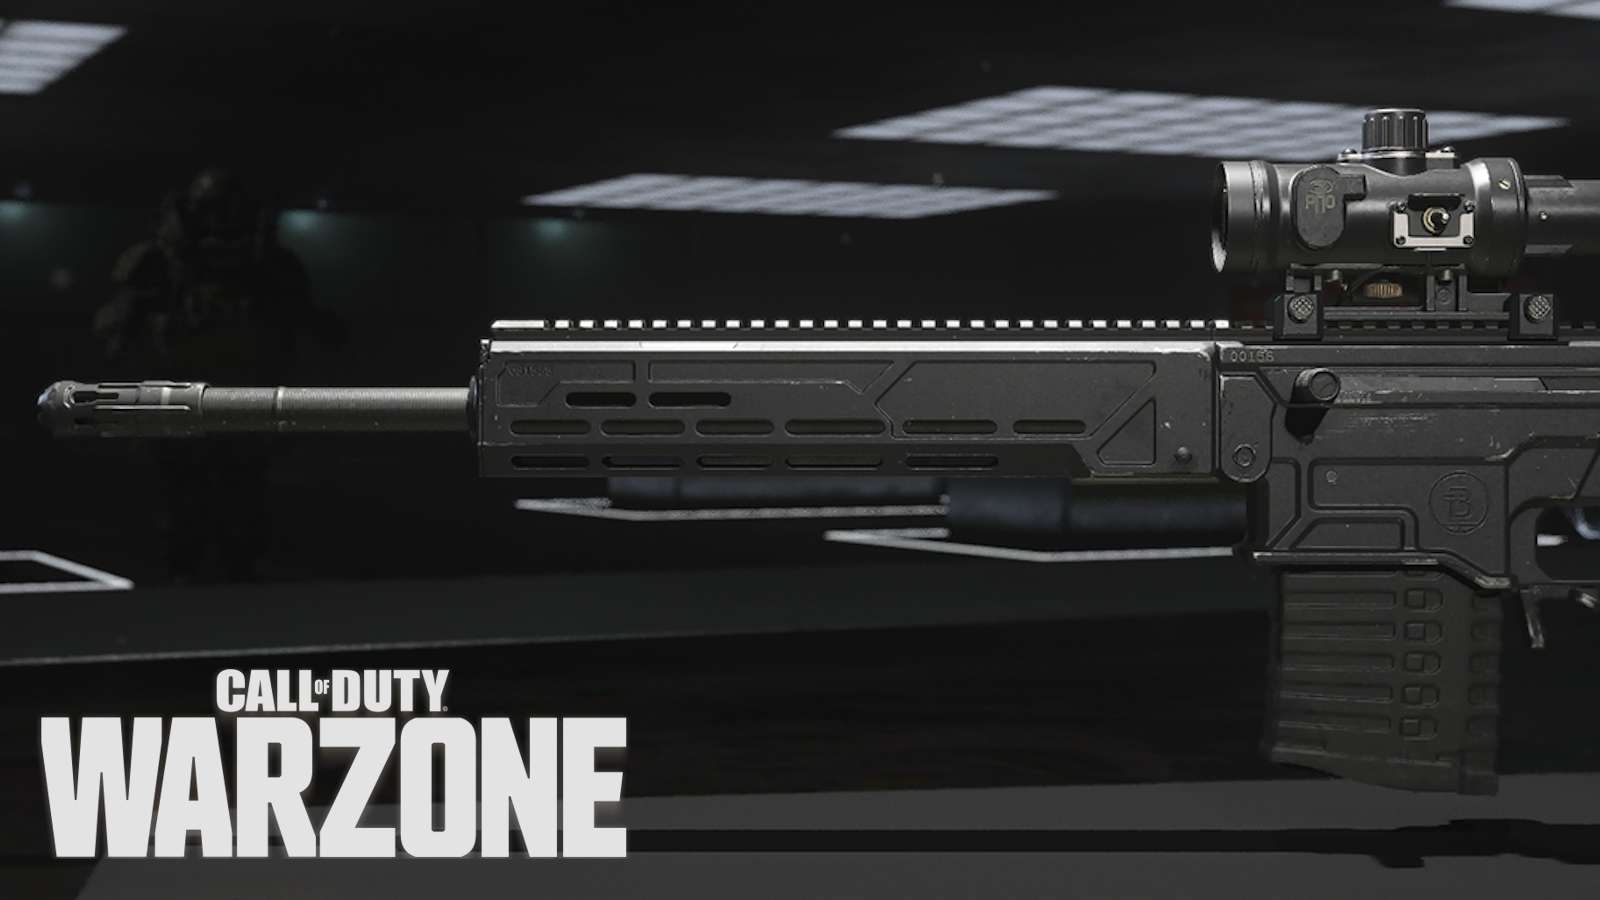 KV Inhibitor sniper rifle with Warzone logo.